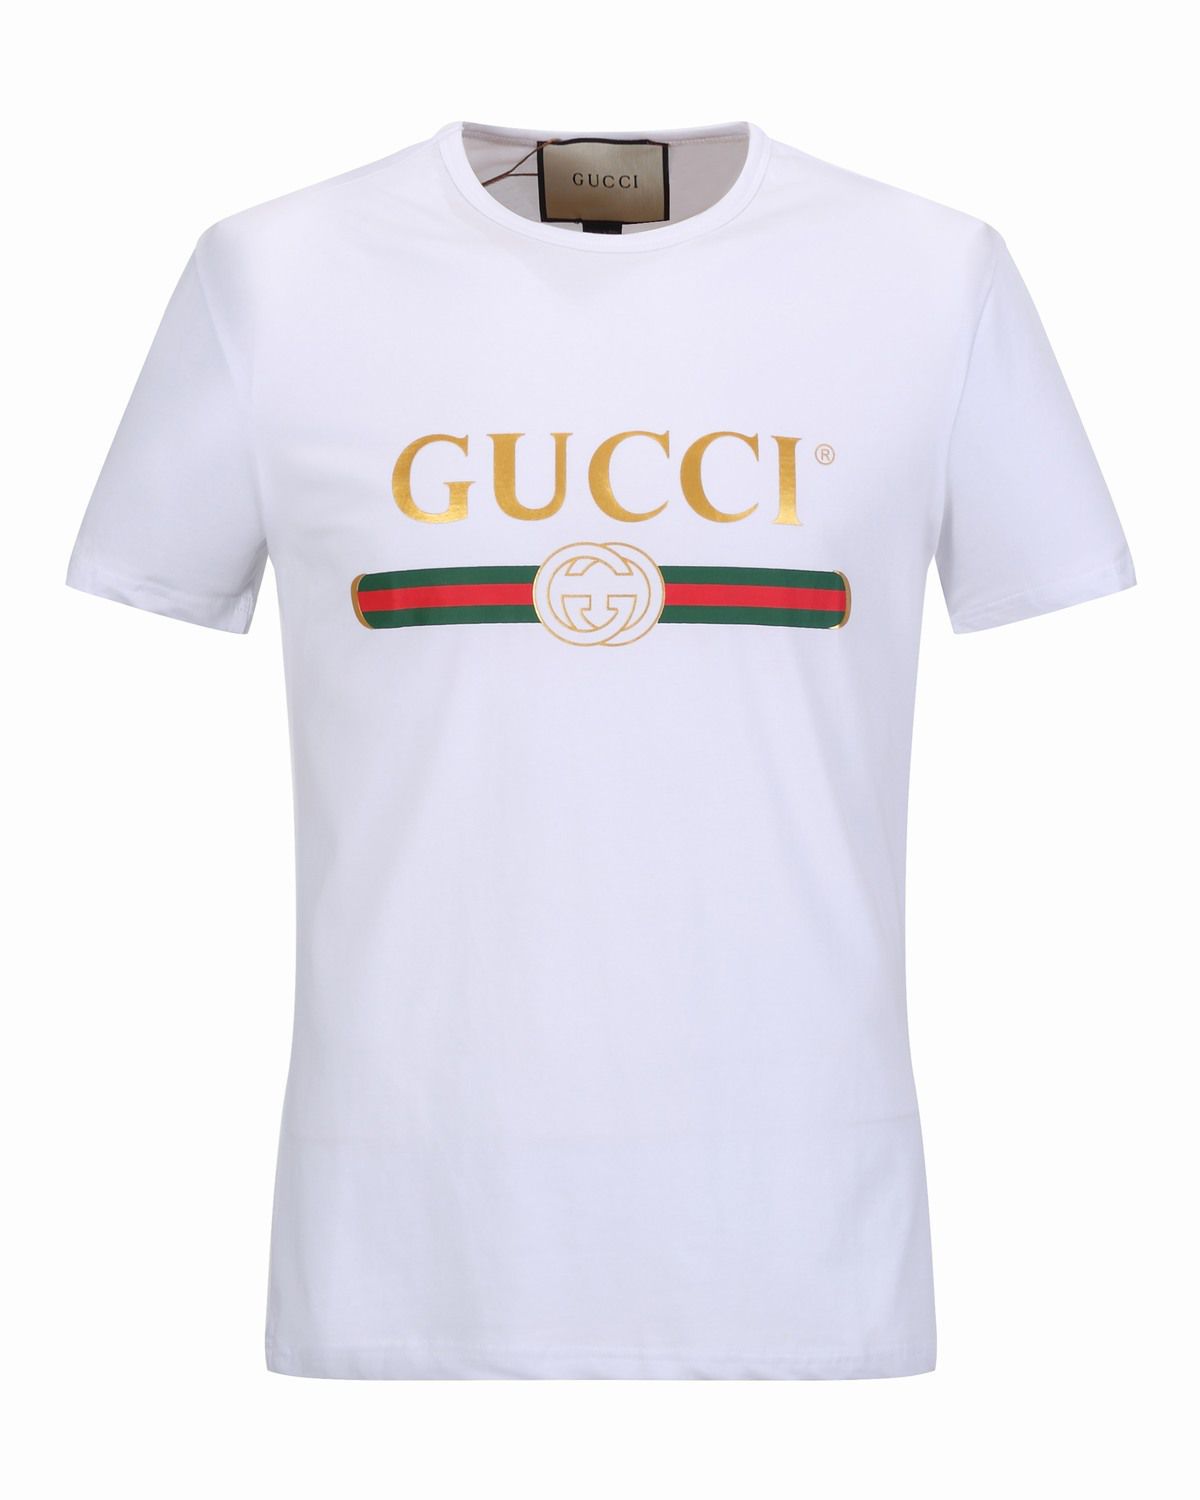 gucci shirt price - 53% OFF - naonsite.com